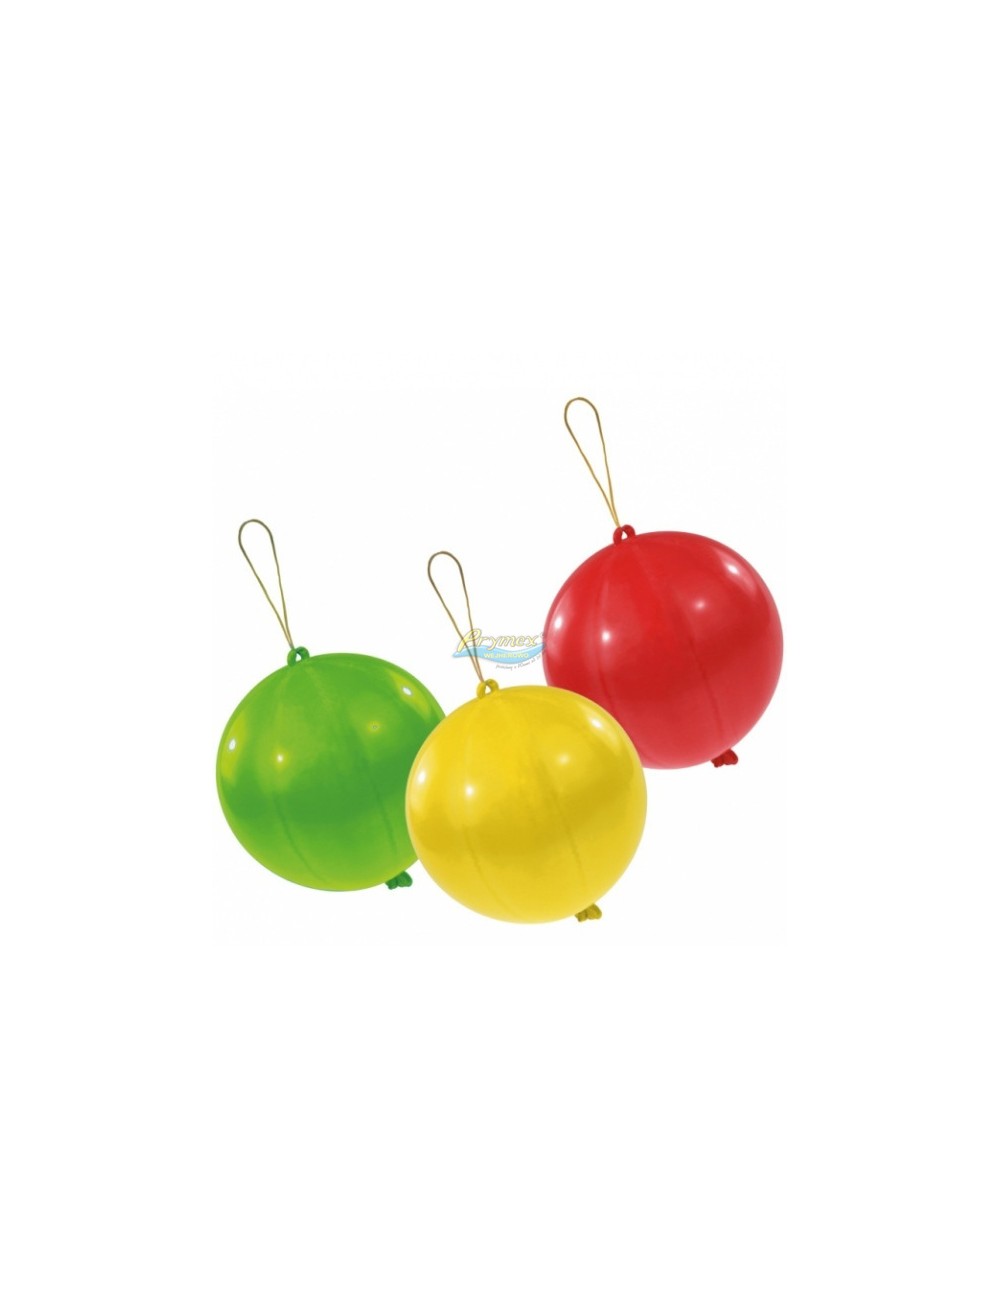 Balony Piłki Mix Kolorów 20 szt